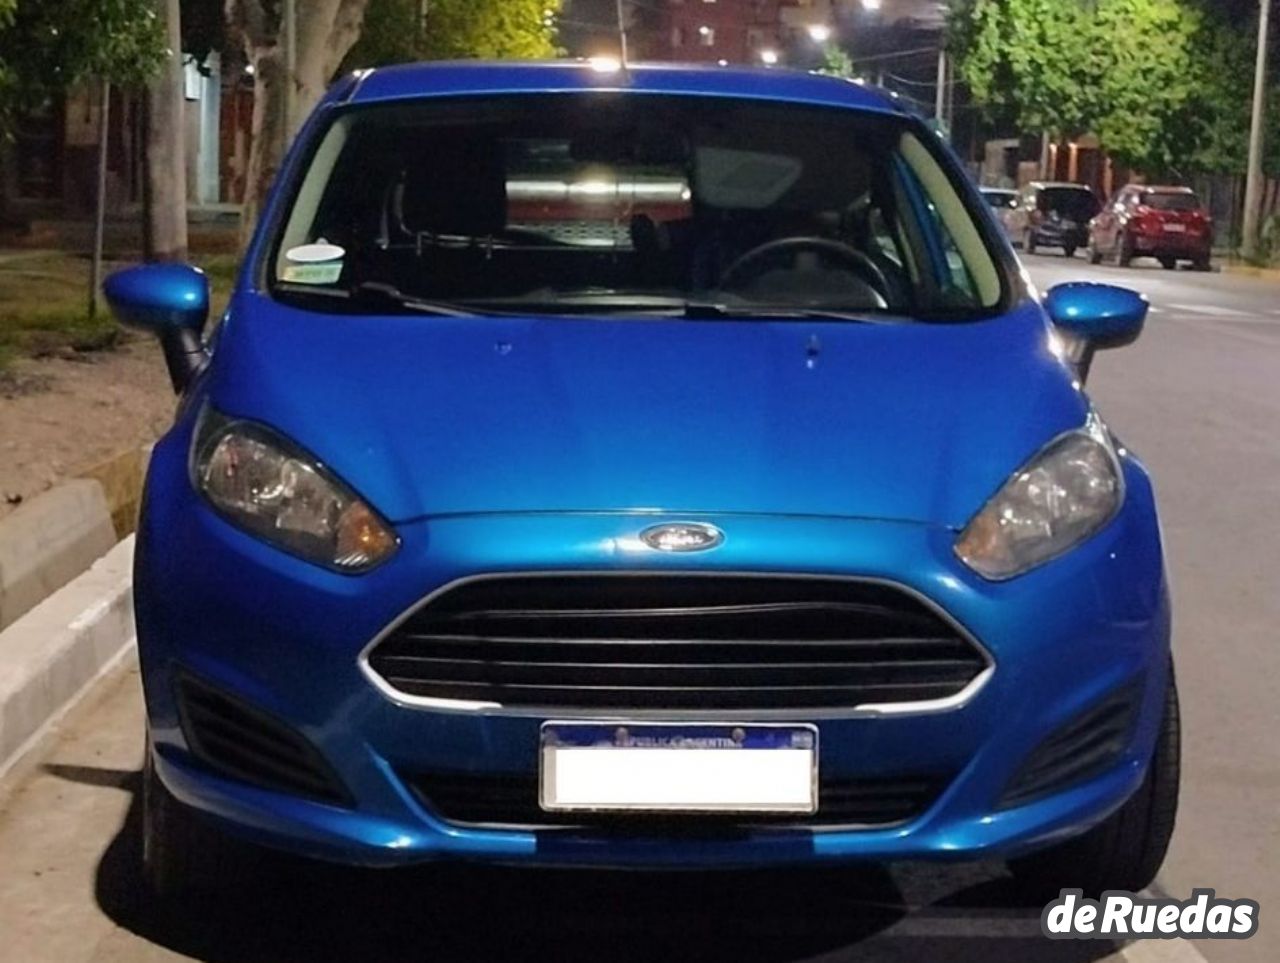 Ford Fiesta KD Usado en San Juan, deRuedas